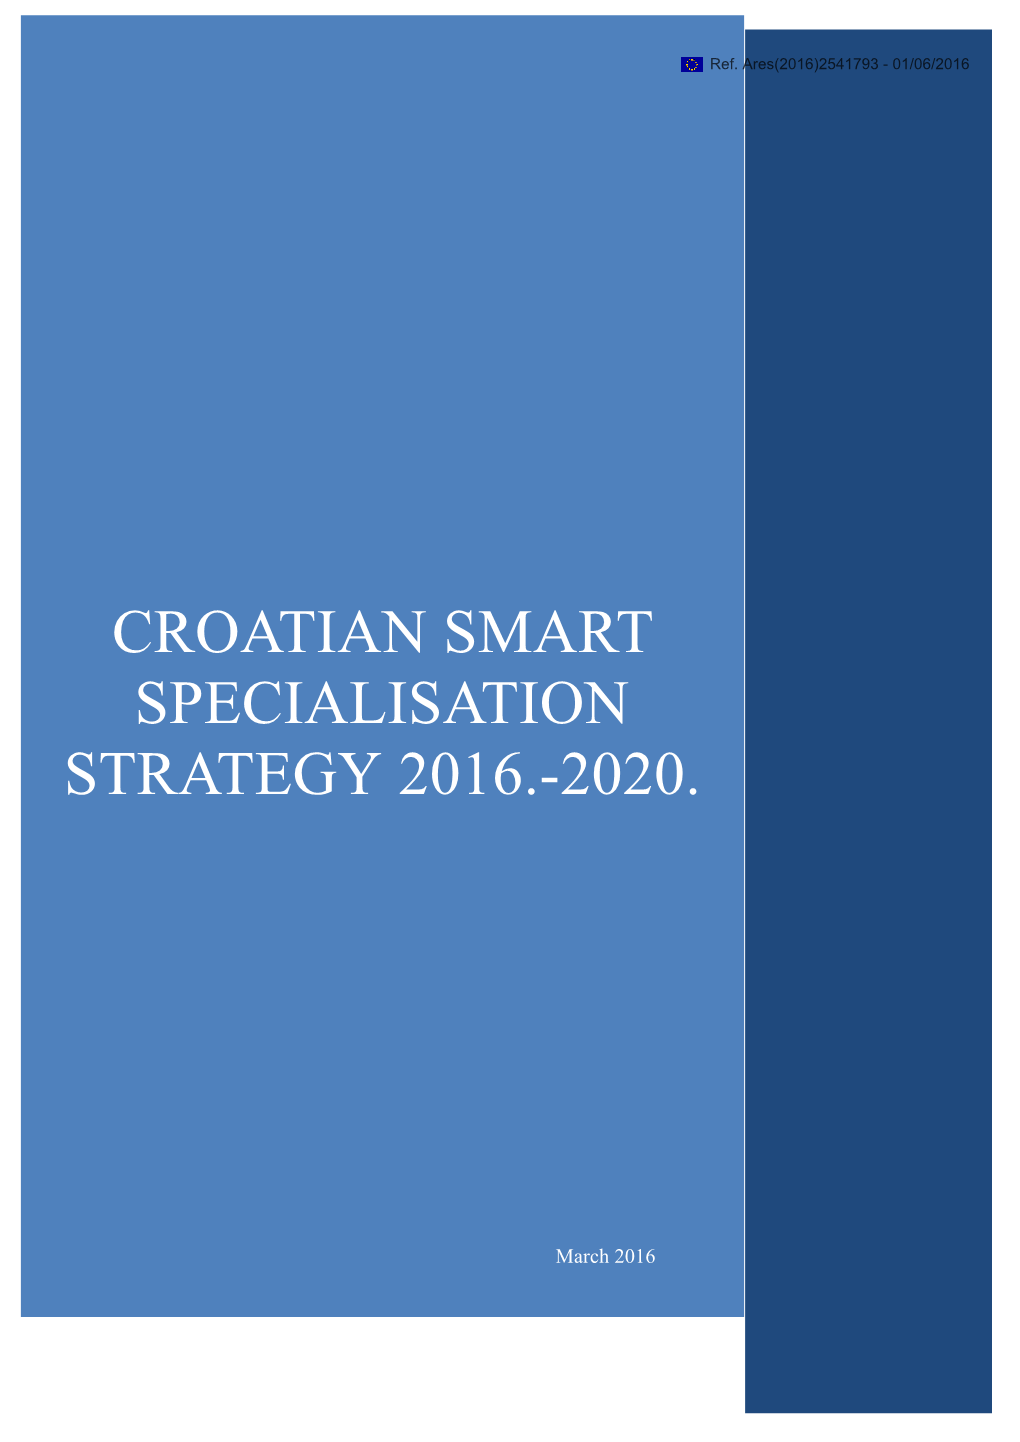 RIS3 Strategy Croatia